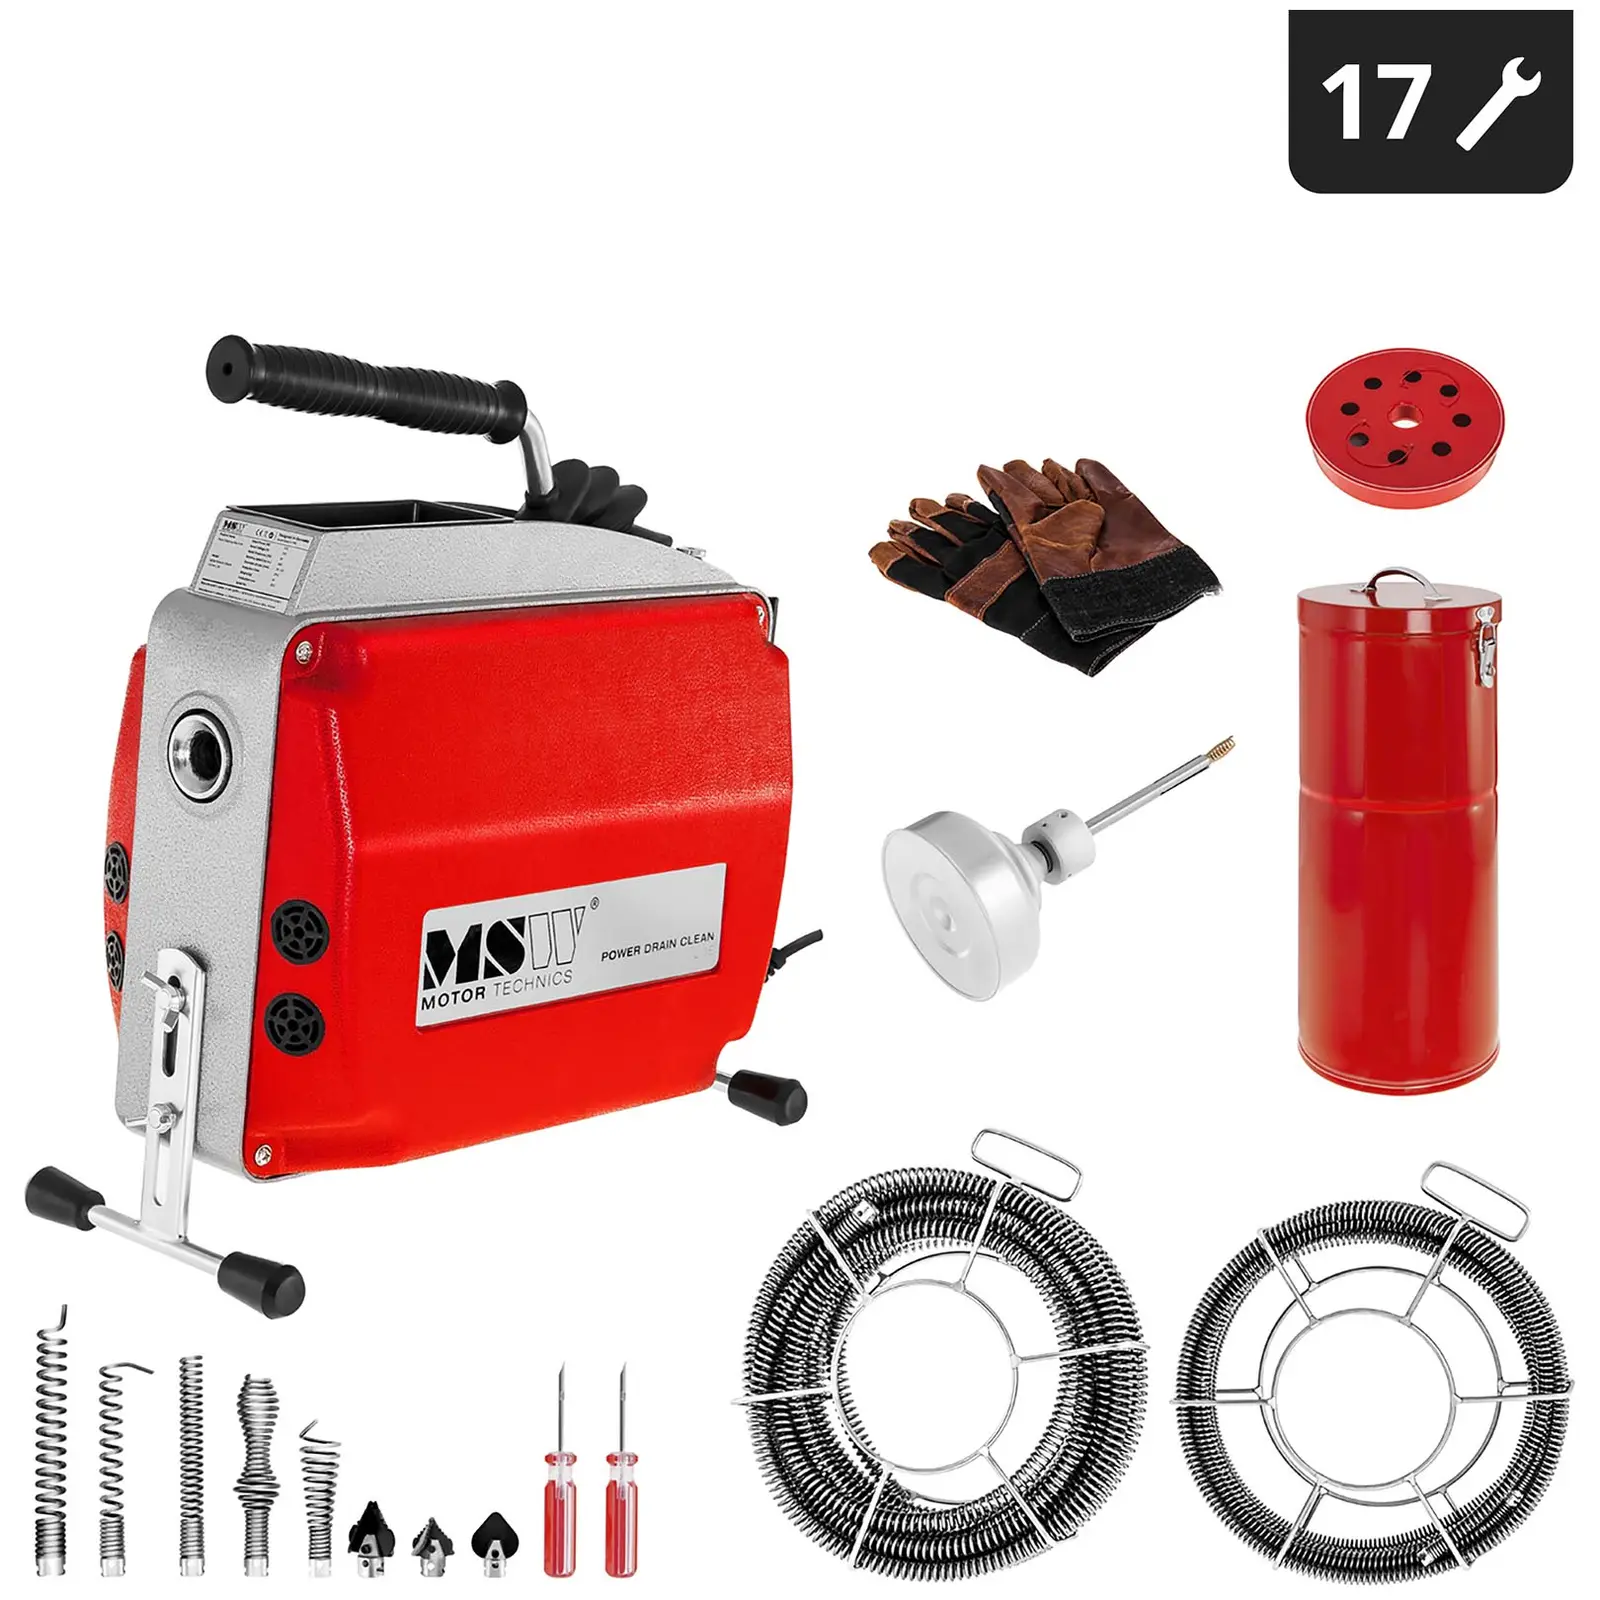 Drain Cleaning Machine 570 Watt 400 rpm Ø 20 - 150 mm